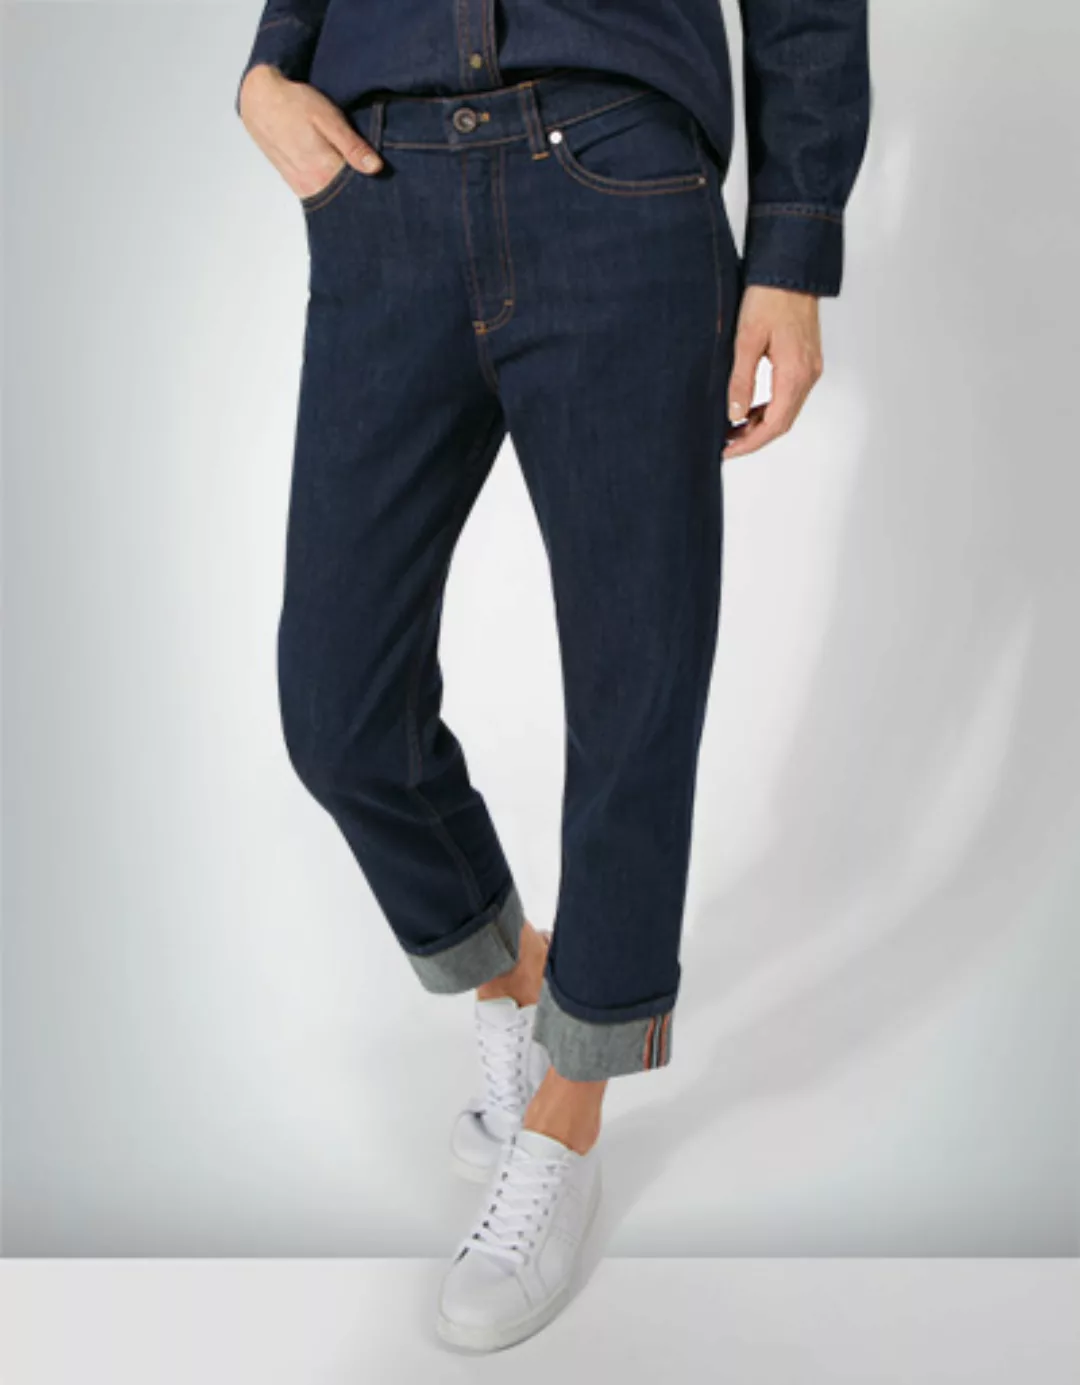 Marc O'Polo Damen Jeans 902 9290 12059/022 günstig online kaufen